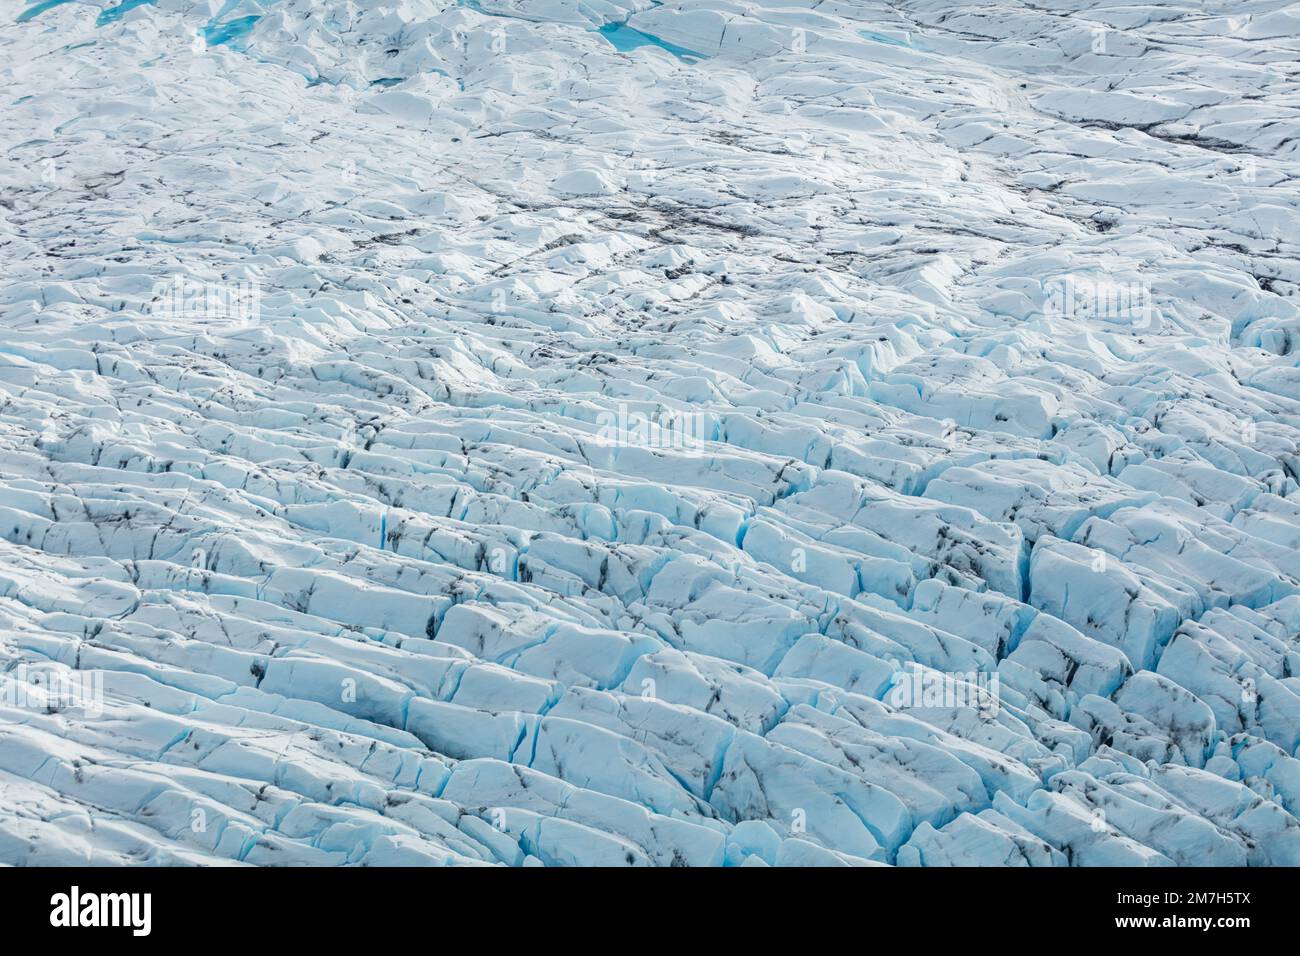 Knik Glacier Abstract Alaska Aerial Photography Stock Photo